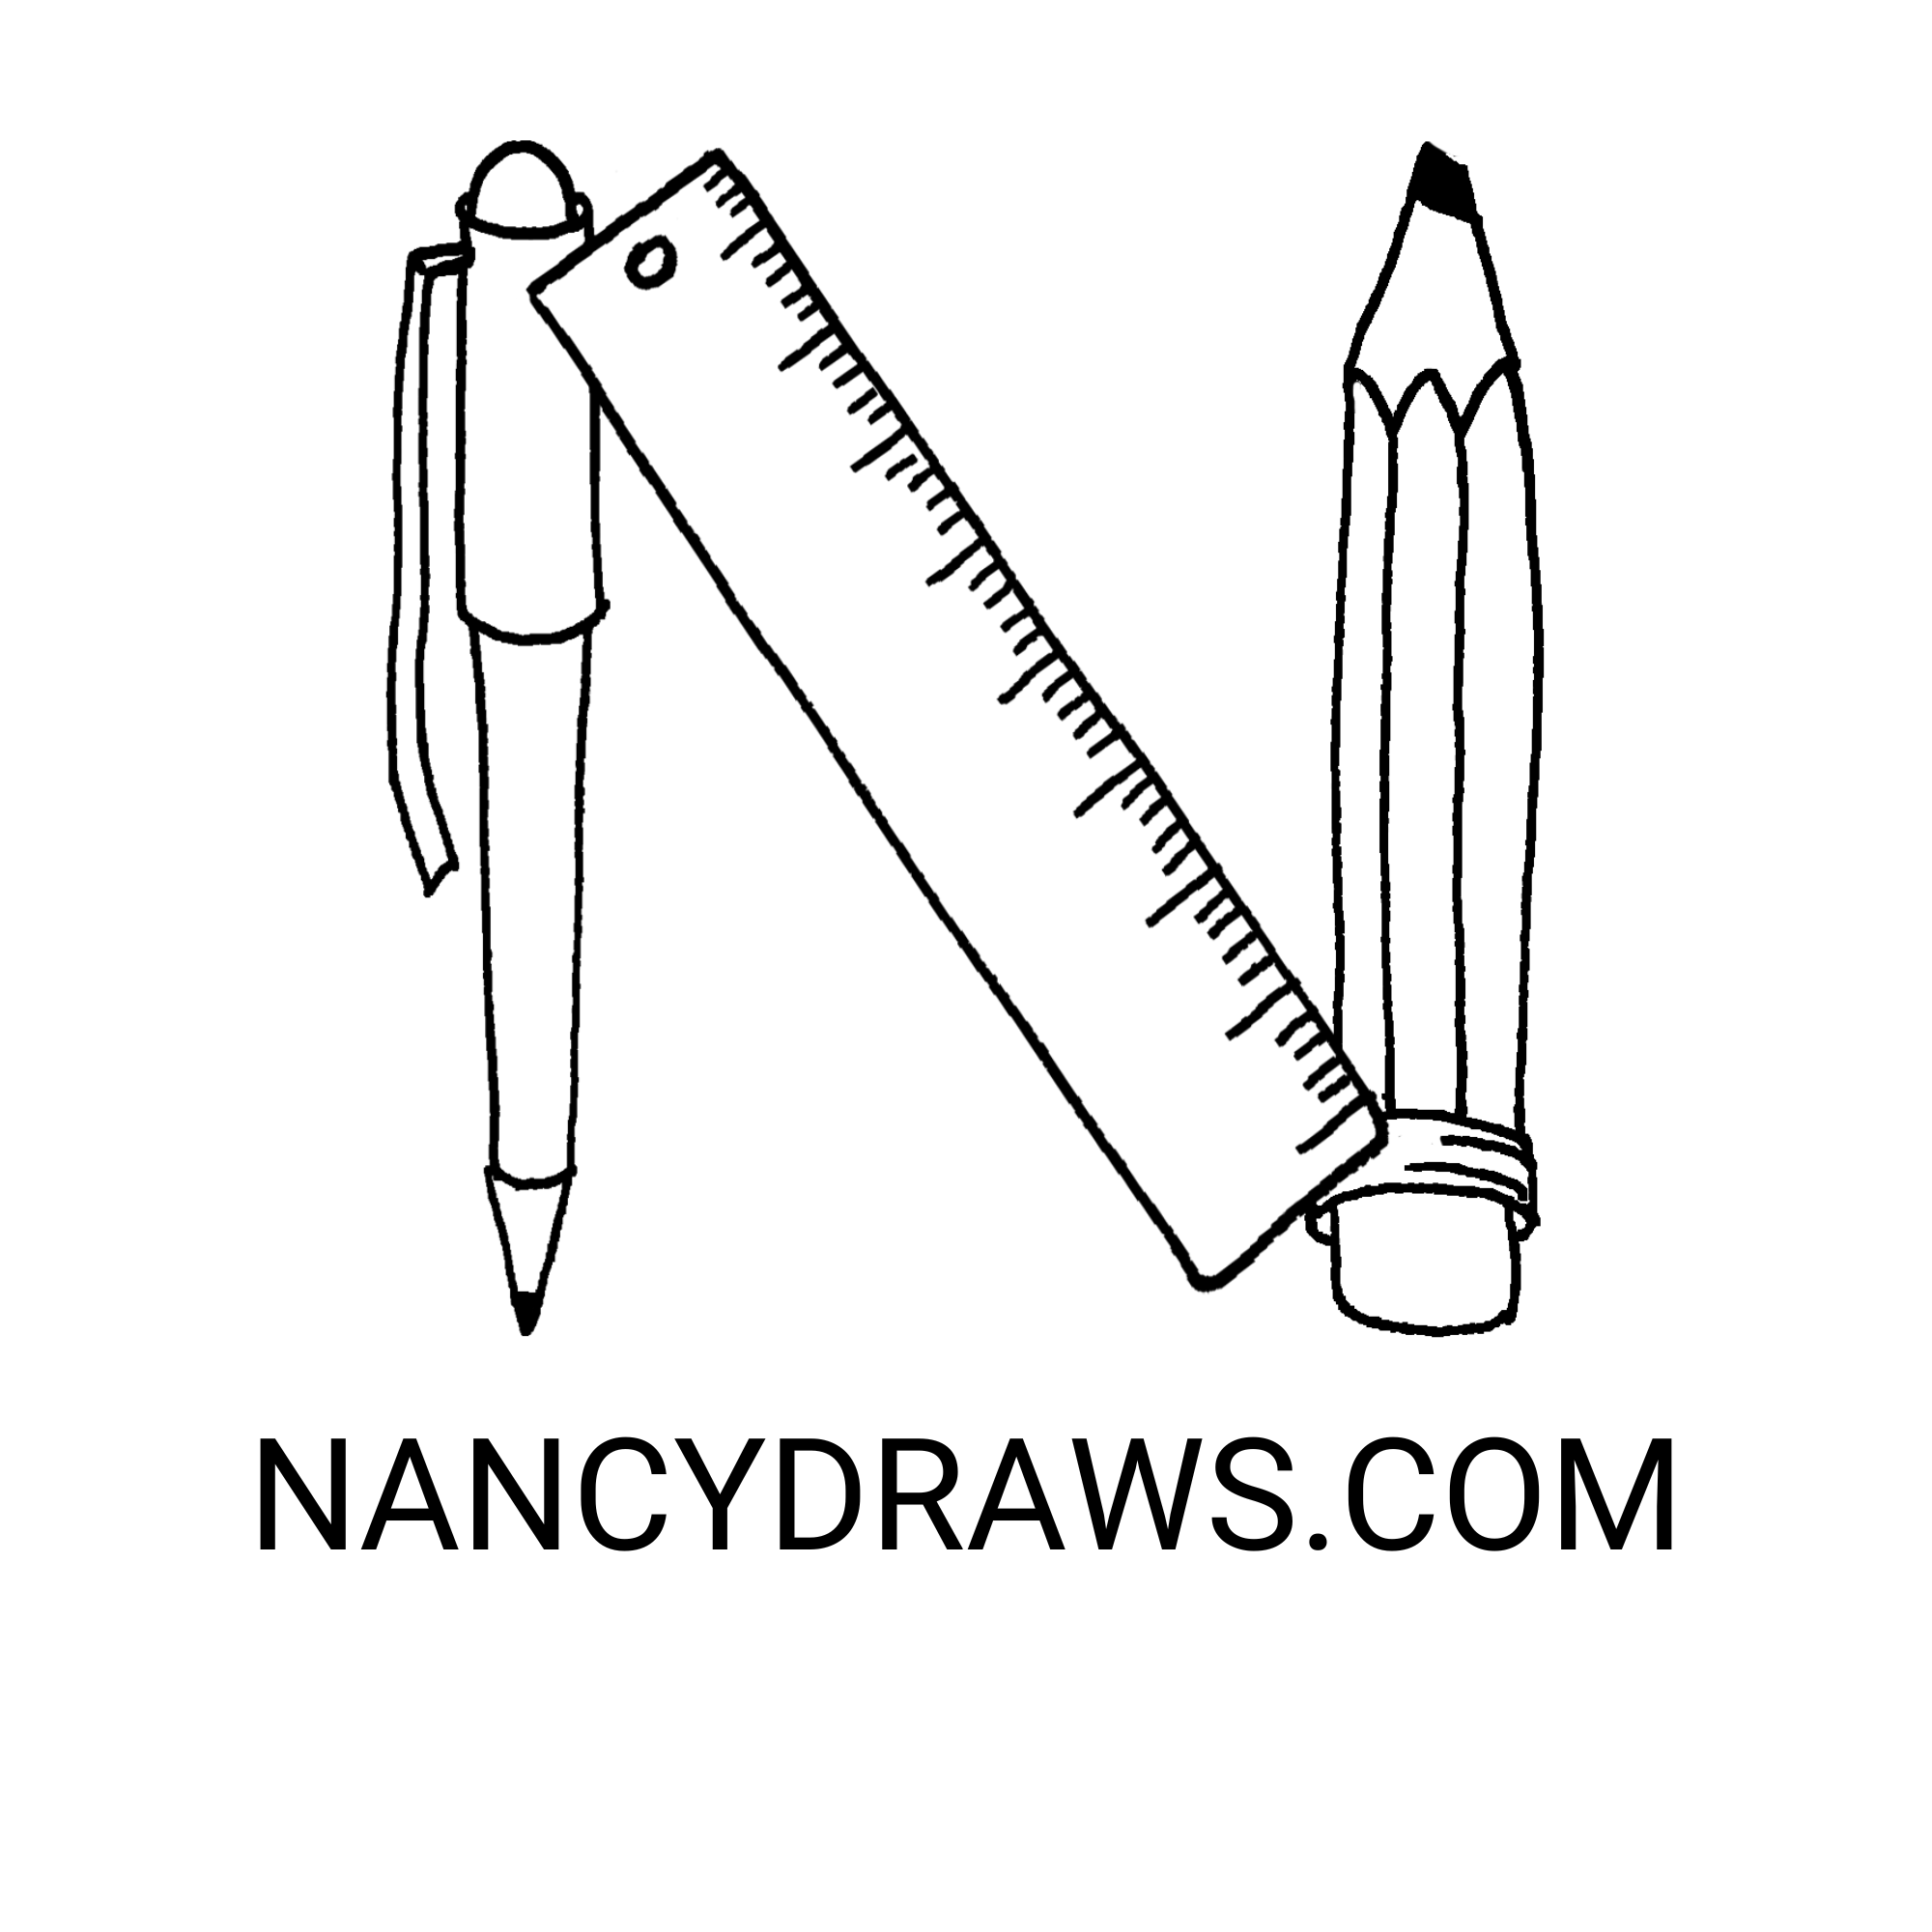 Nancydraws.com